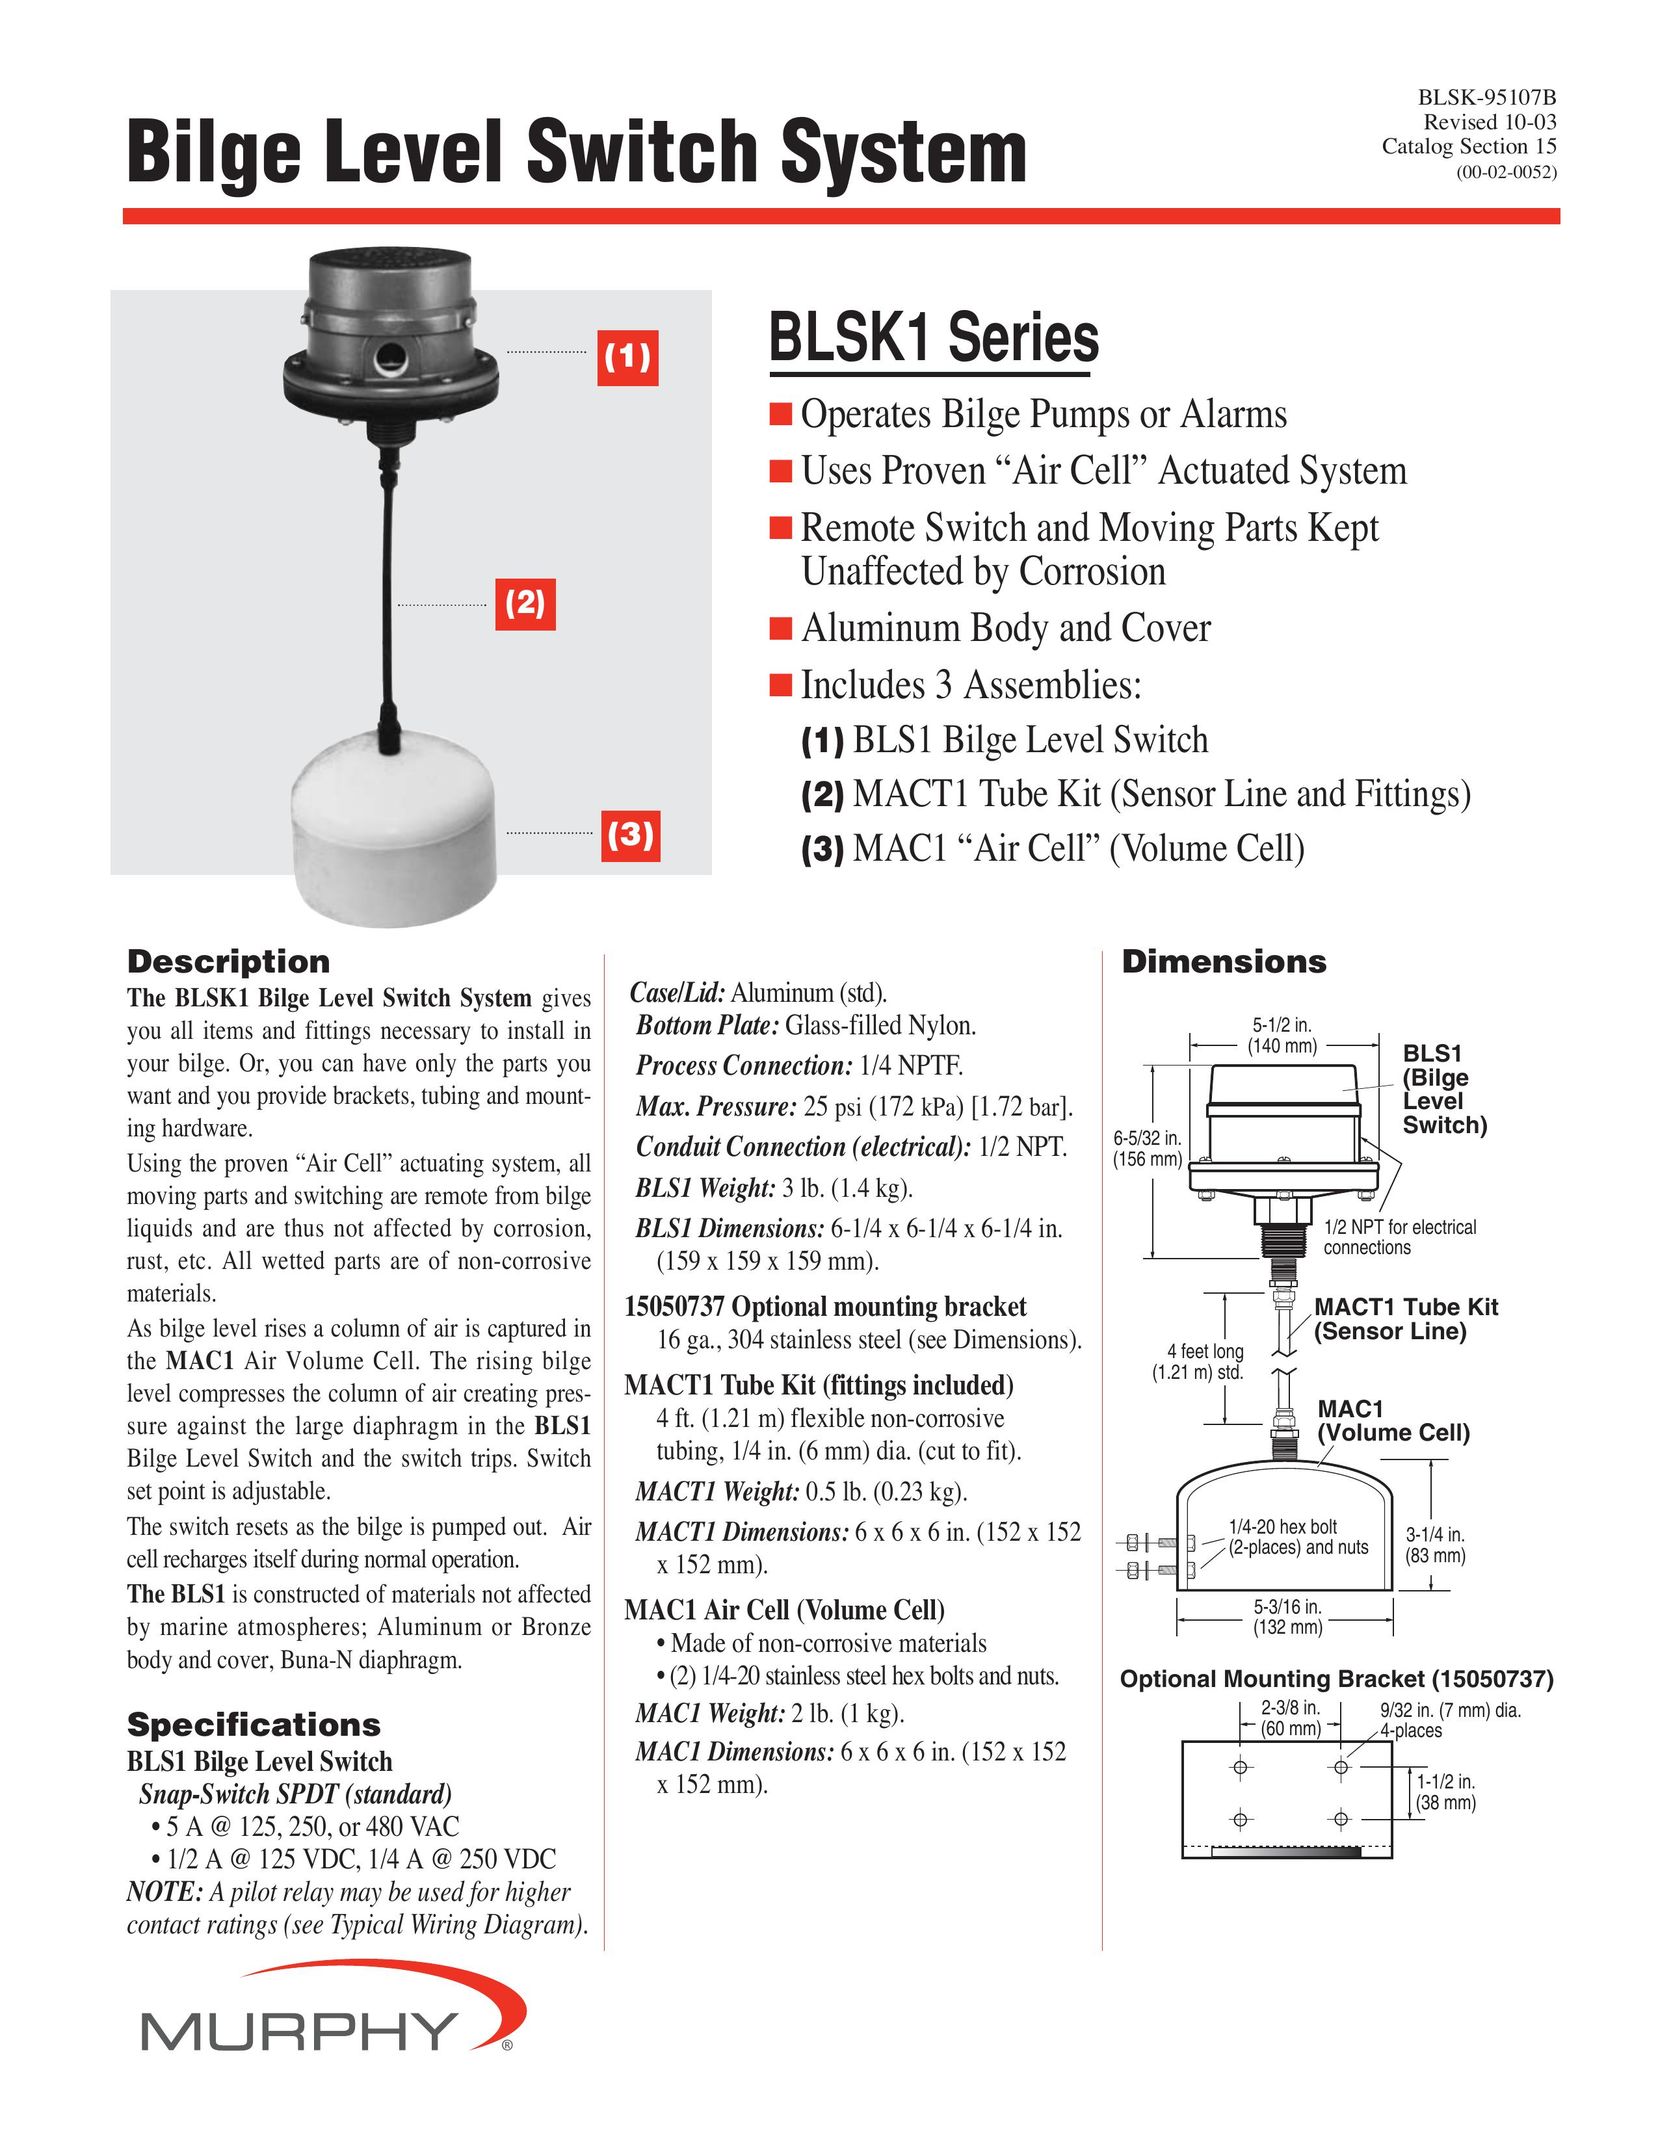 Murphy BLSK1 Series Plumbing Product User Manual